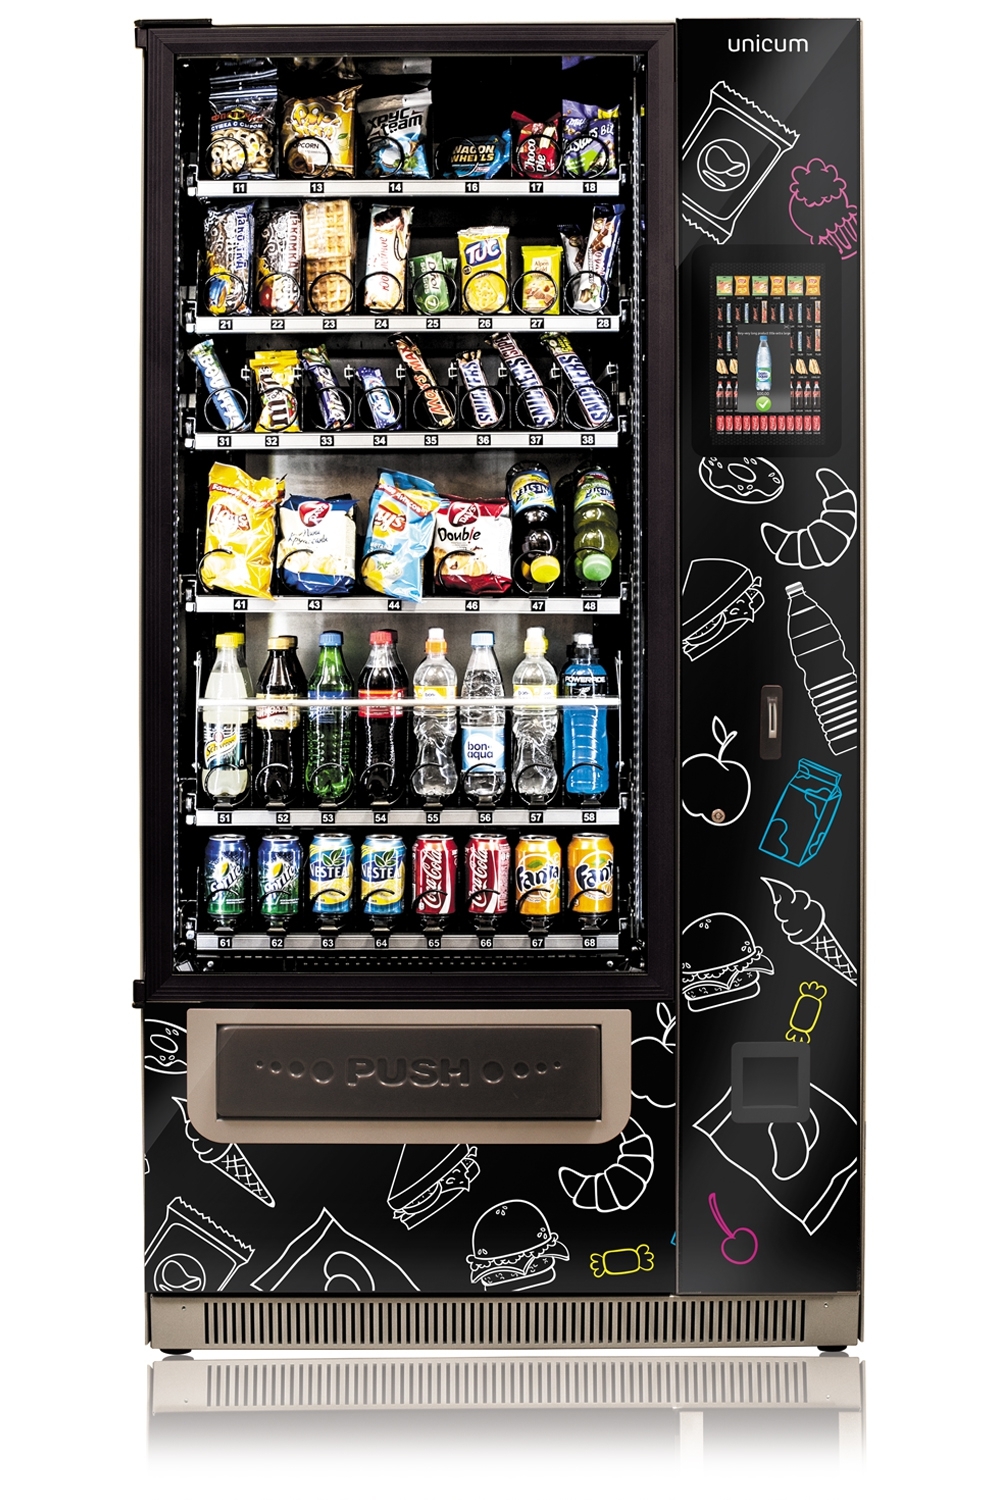 UNICUM Foodbox снековый автомат